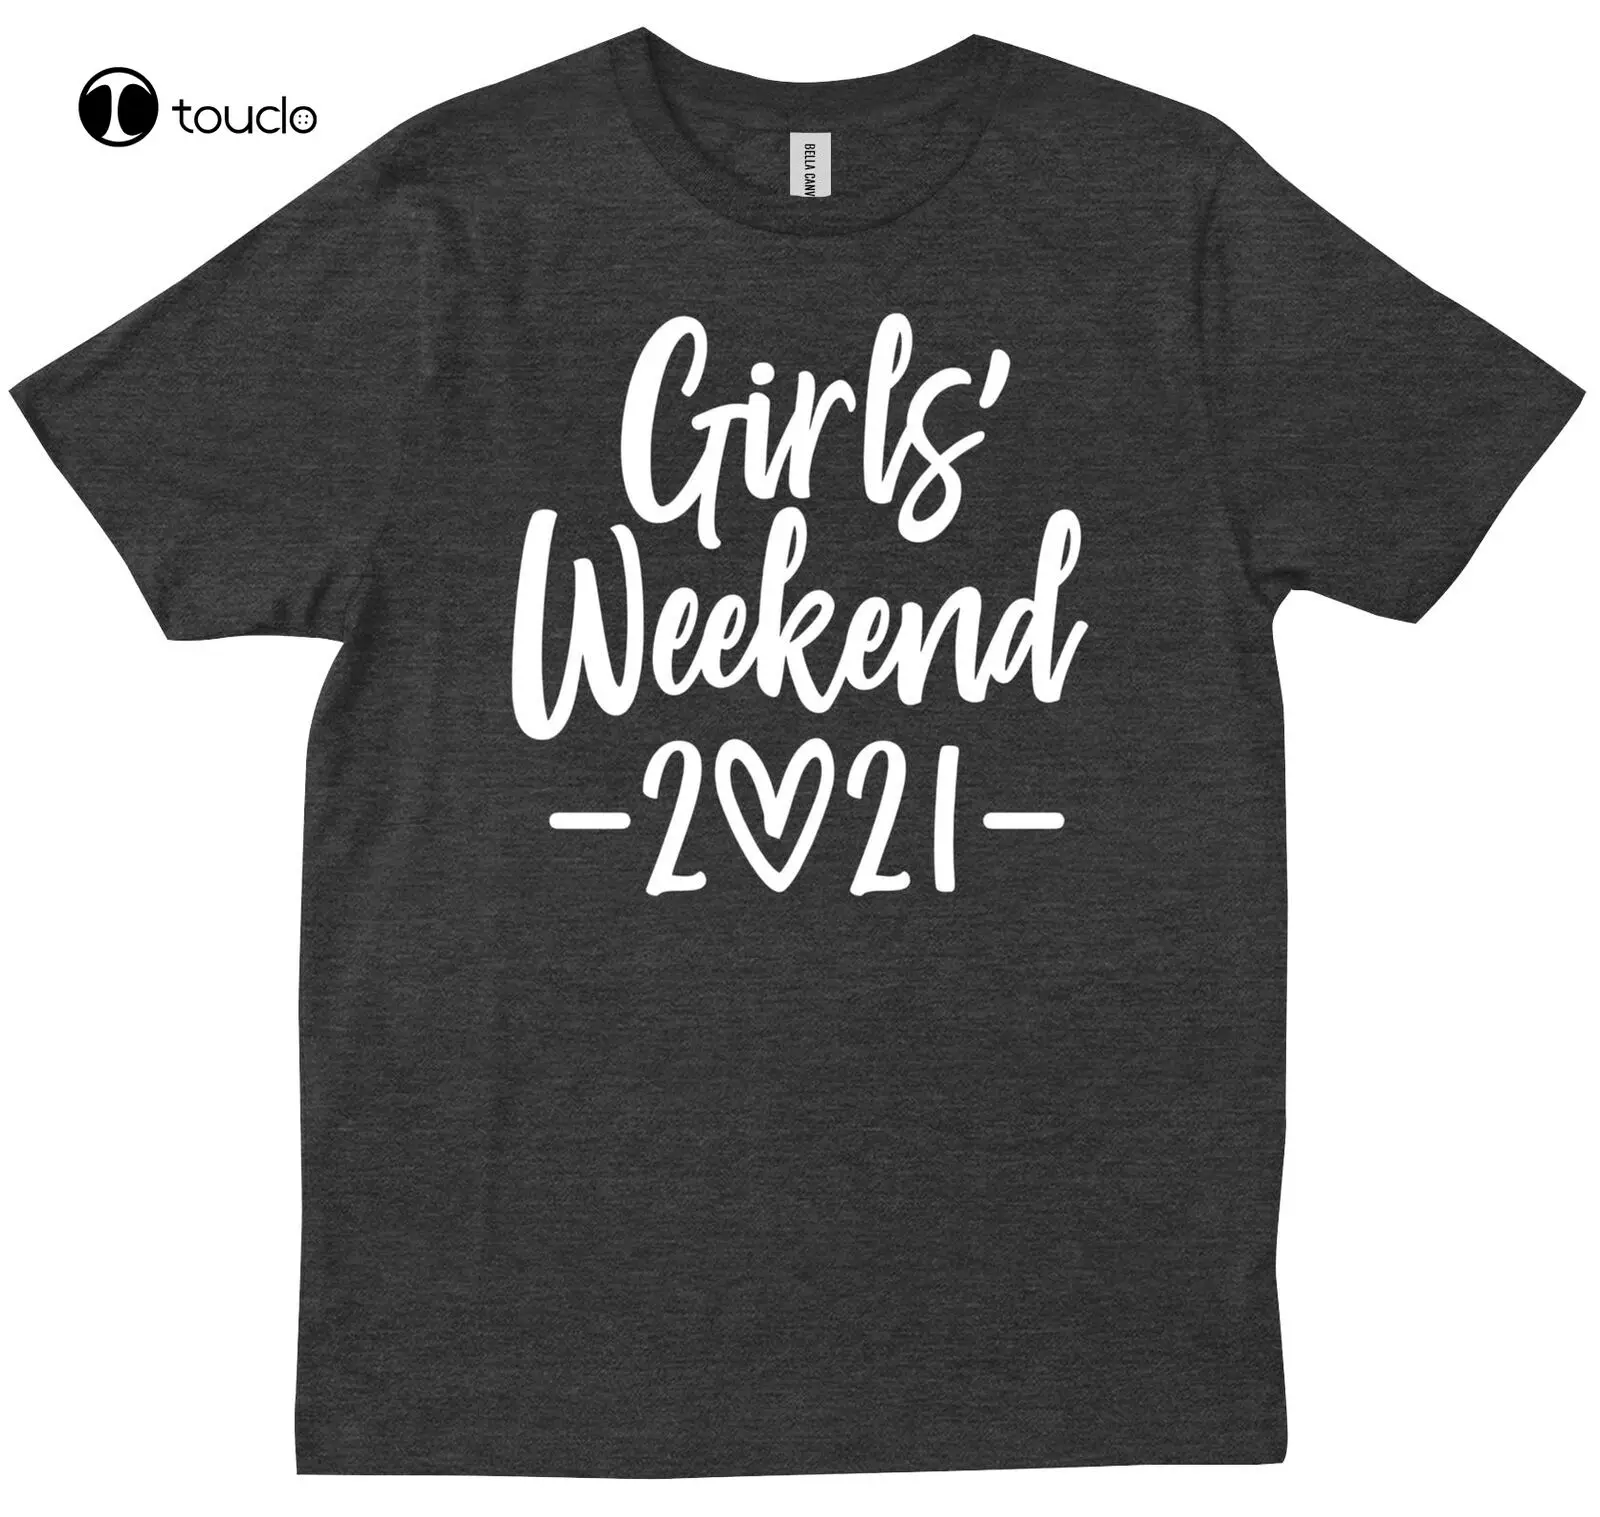 

New Girls Weekend 2021 Girls Trip Vacation Girl Camping Party Bachelorette T-Shirt Cotton Tee Shirt Unisex